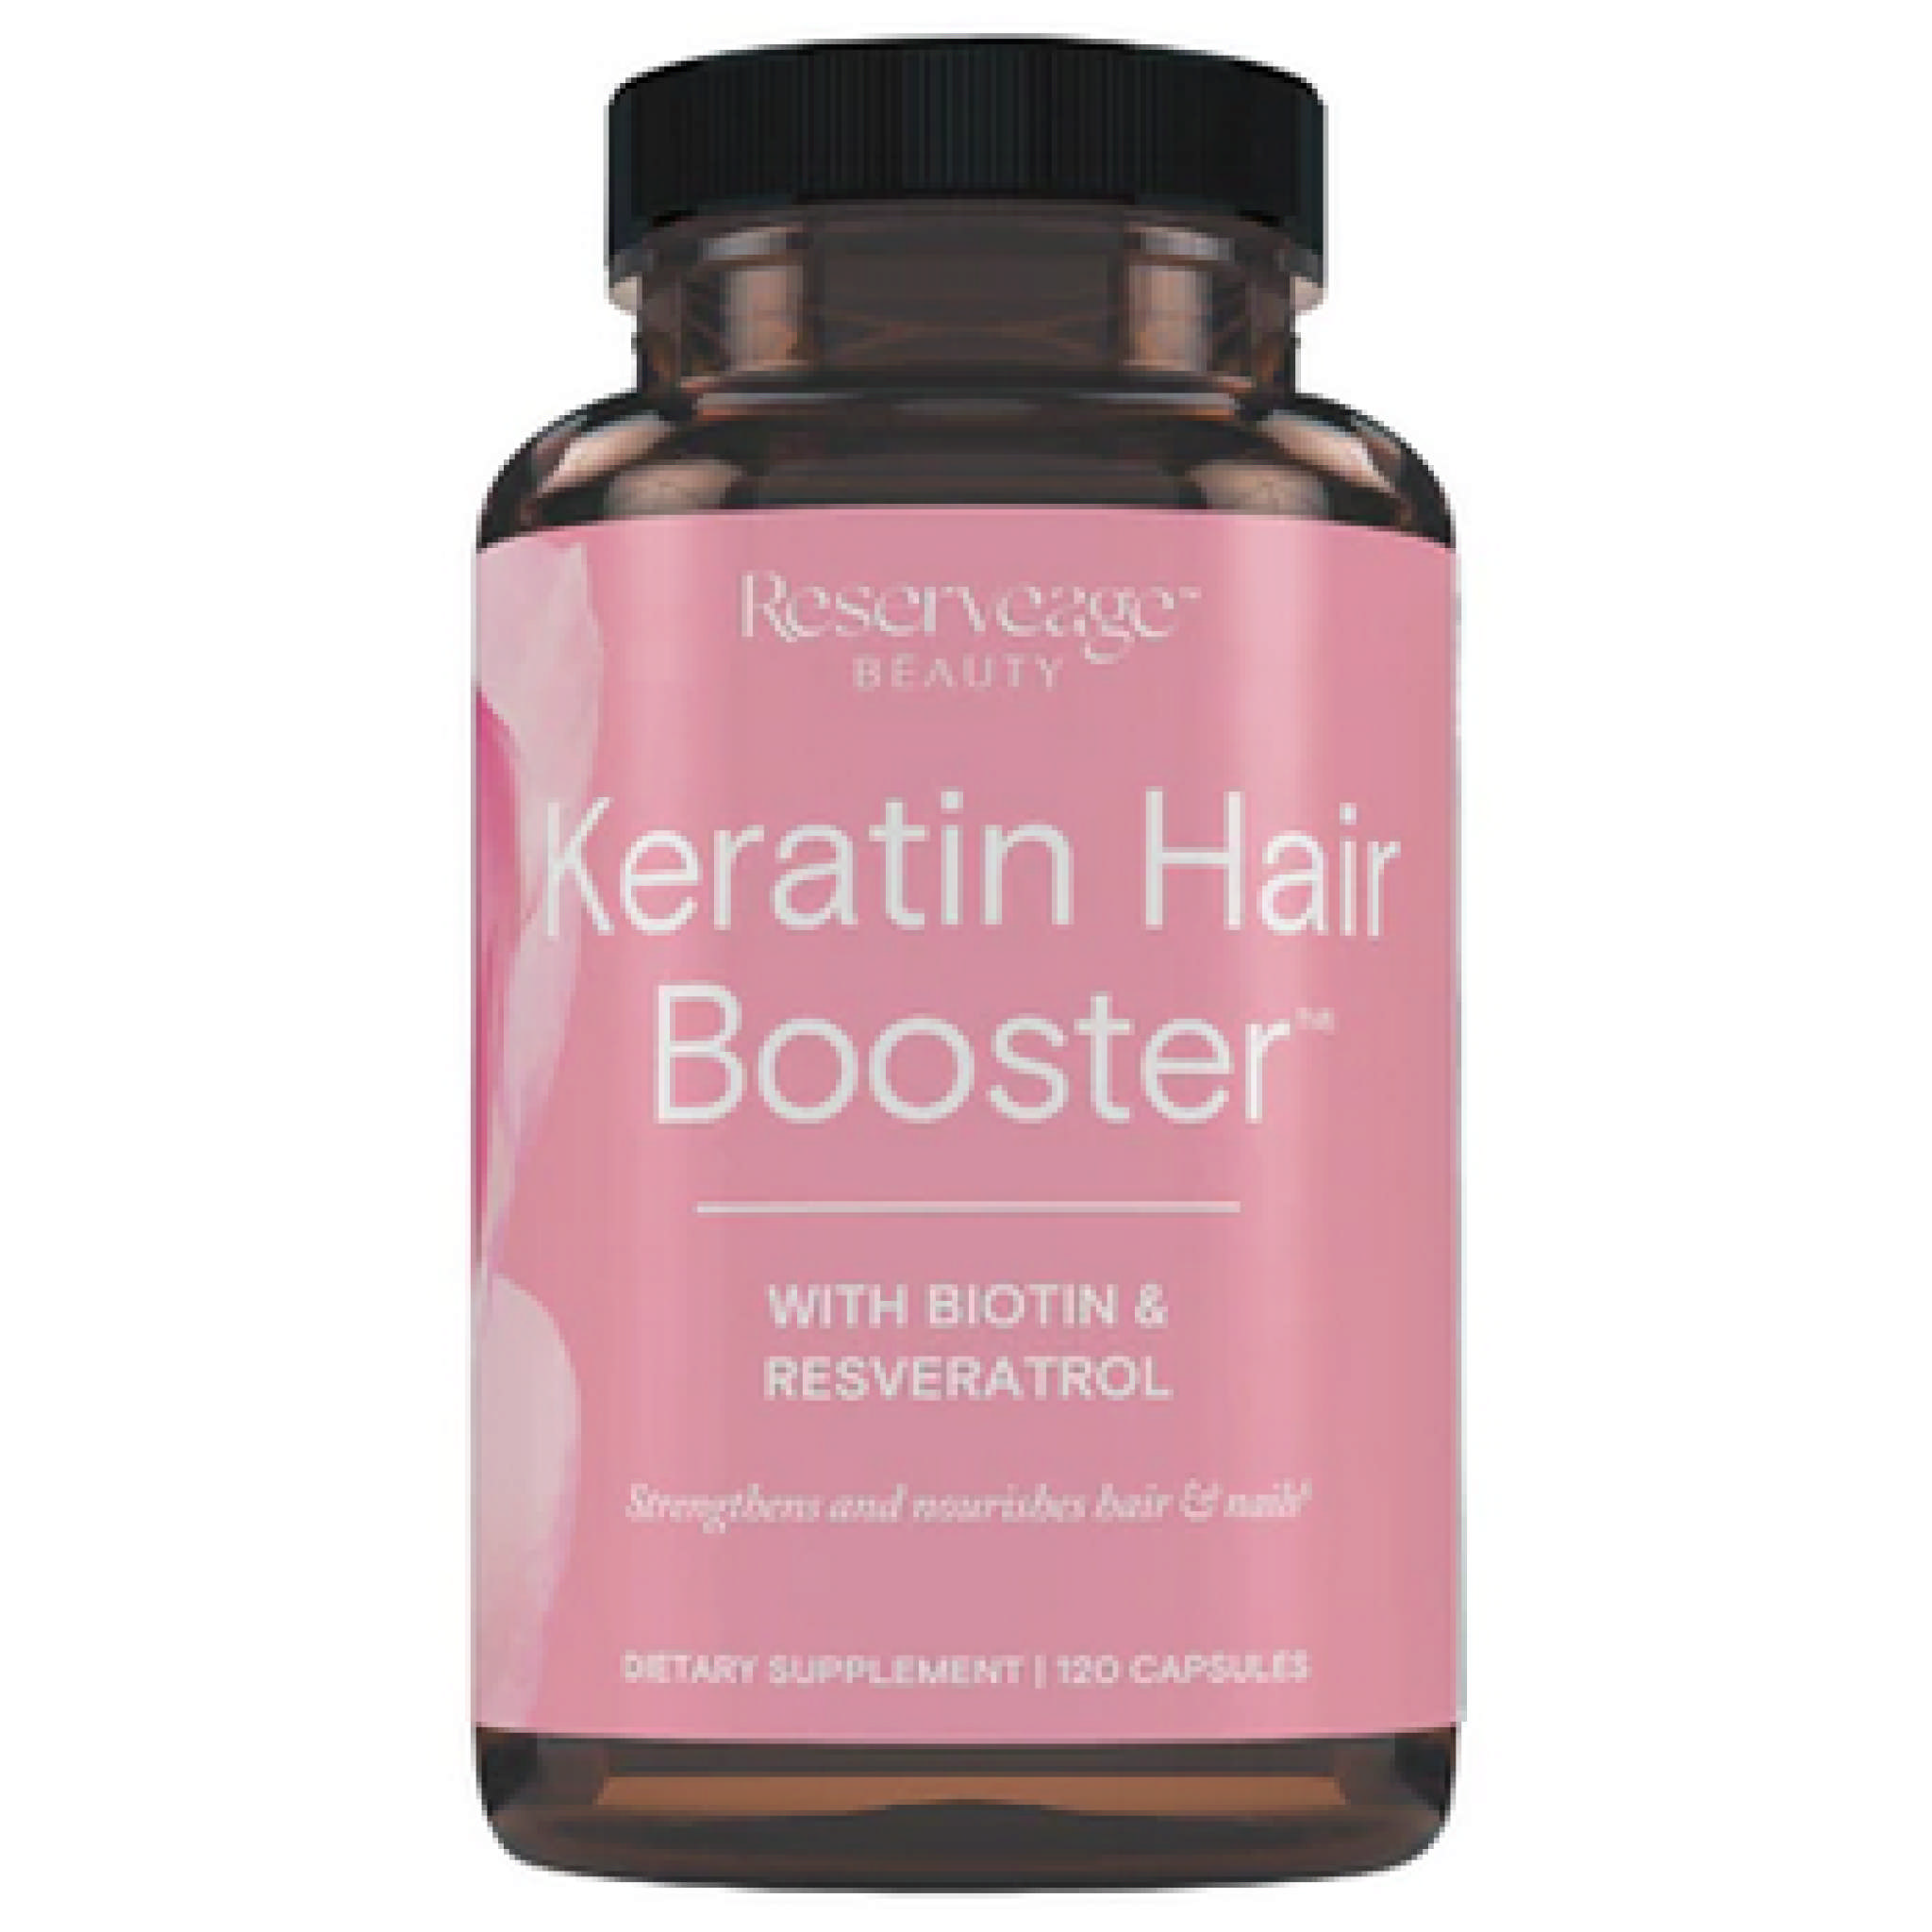 Reserveage Organics - Keratin Hair Booster